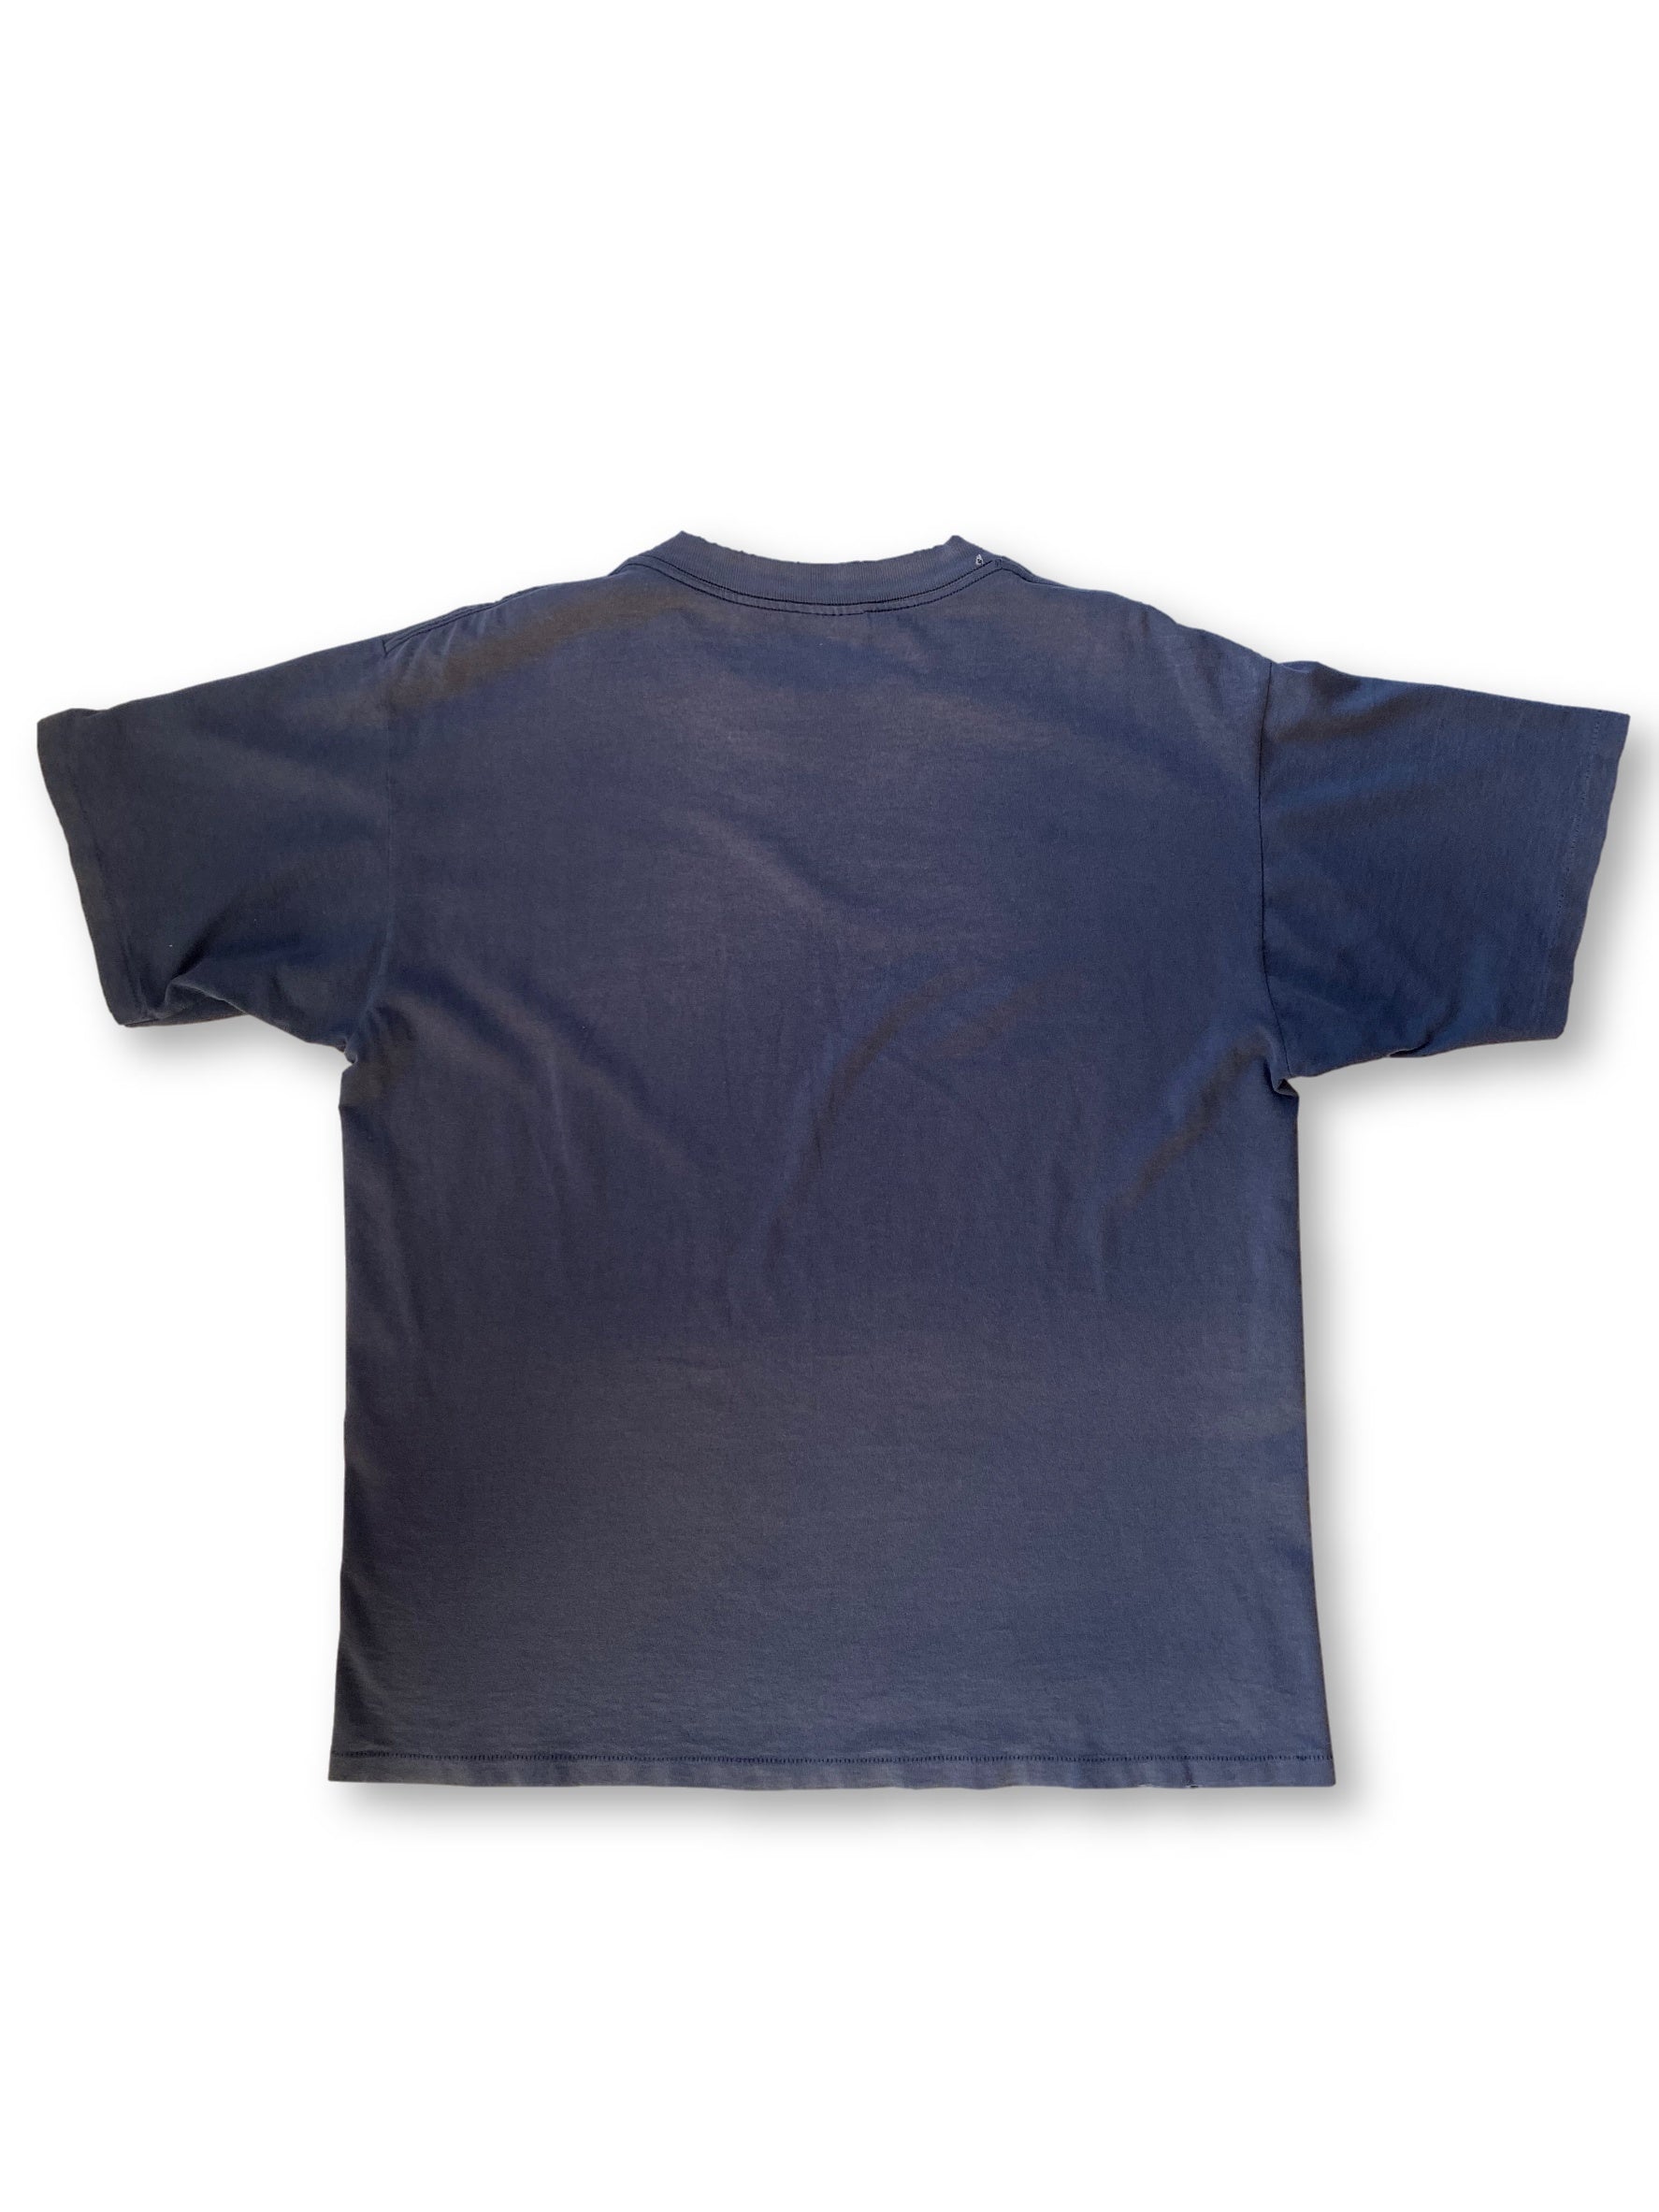 Vintage Thrasher T-Shirt - Large